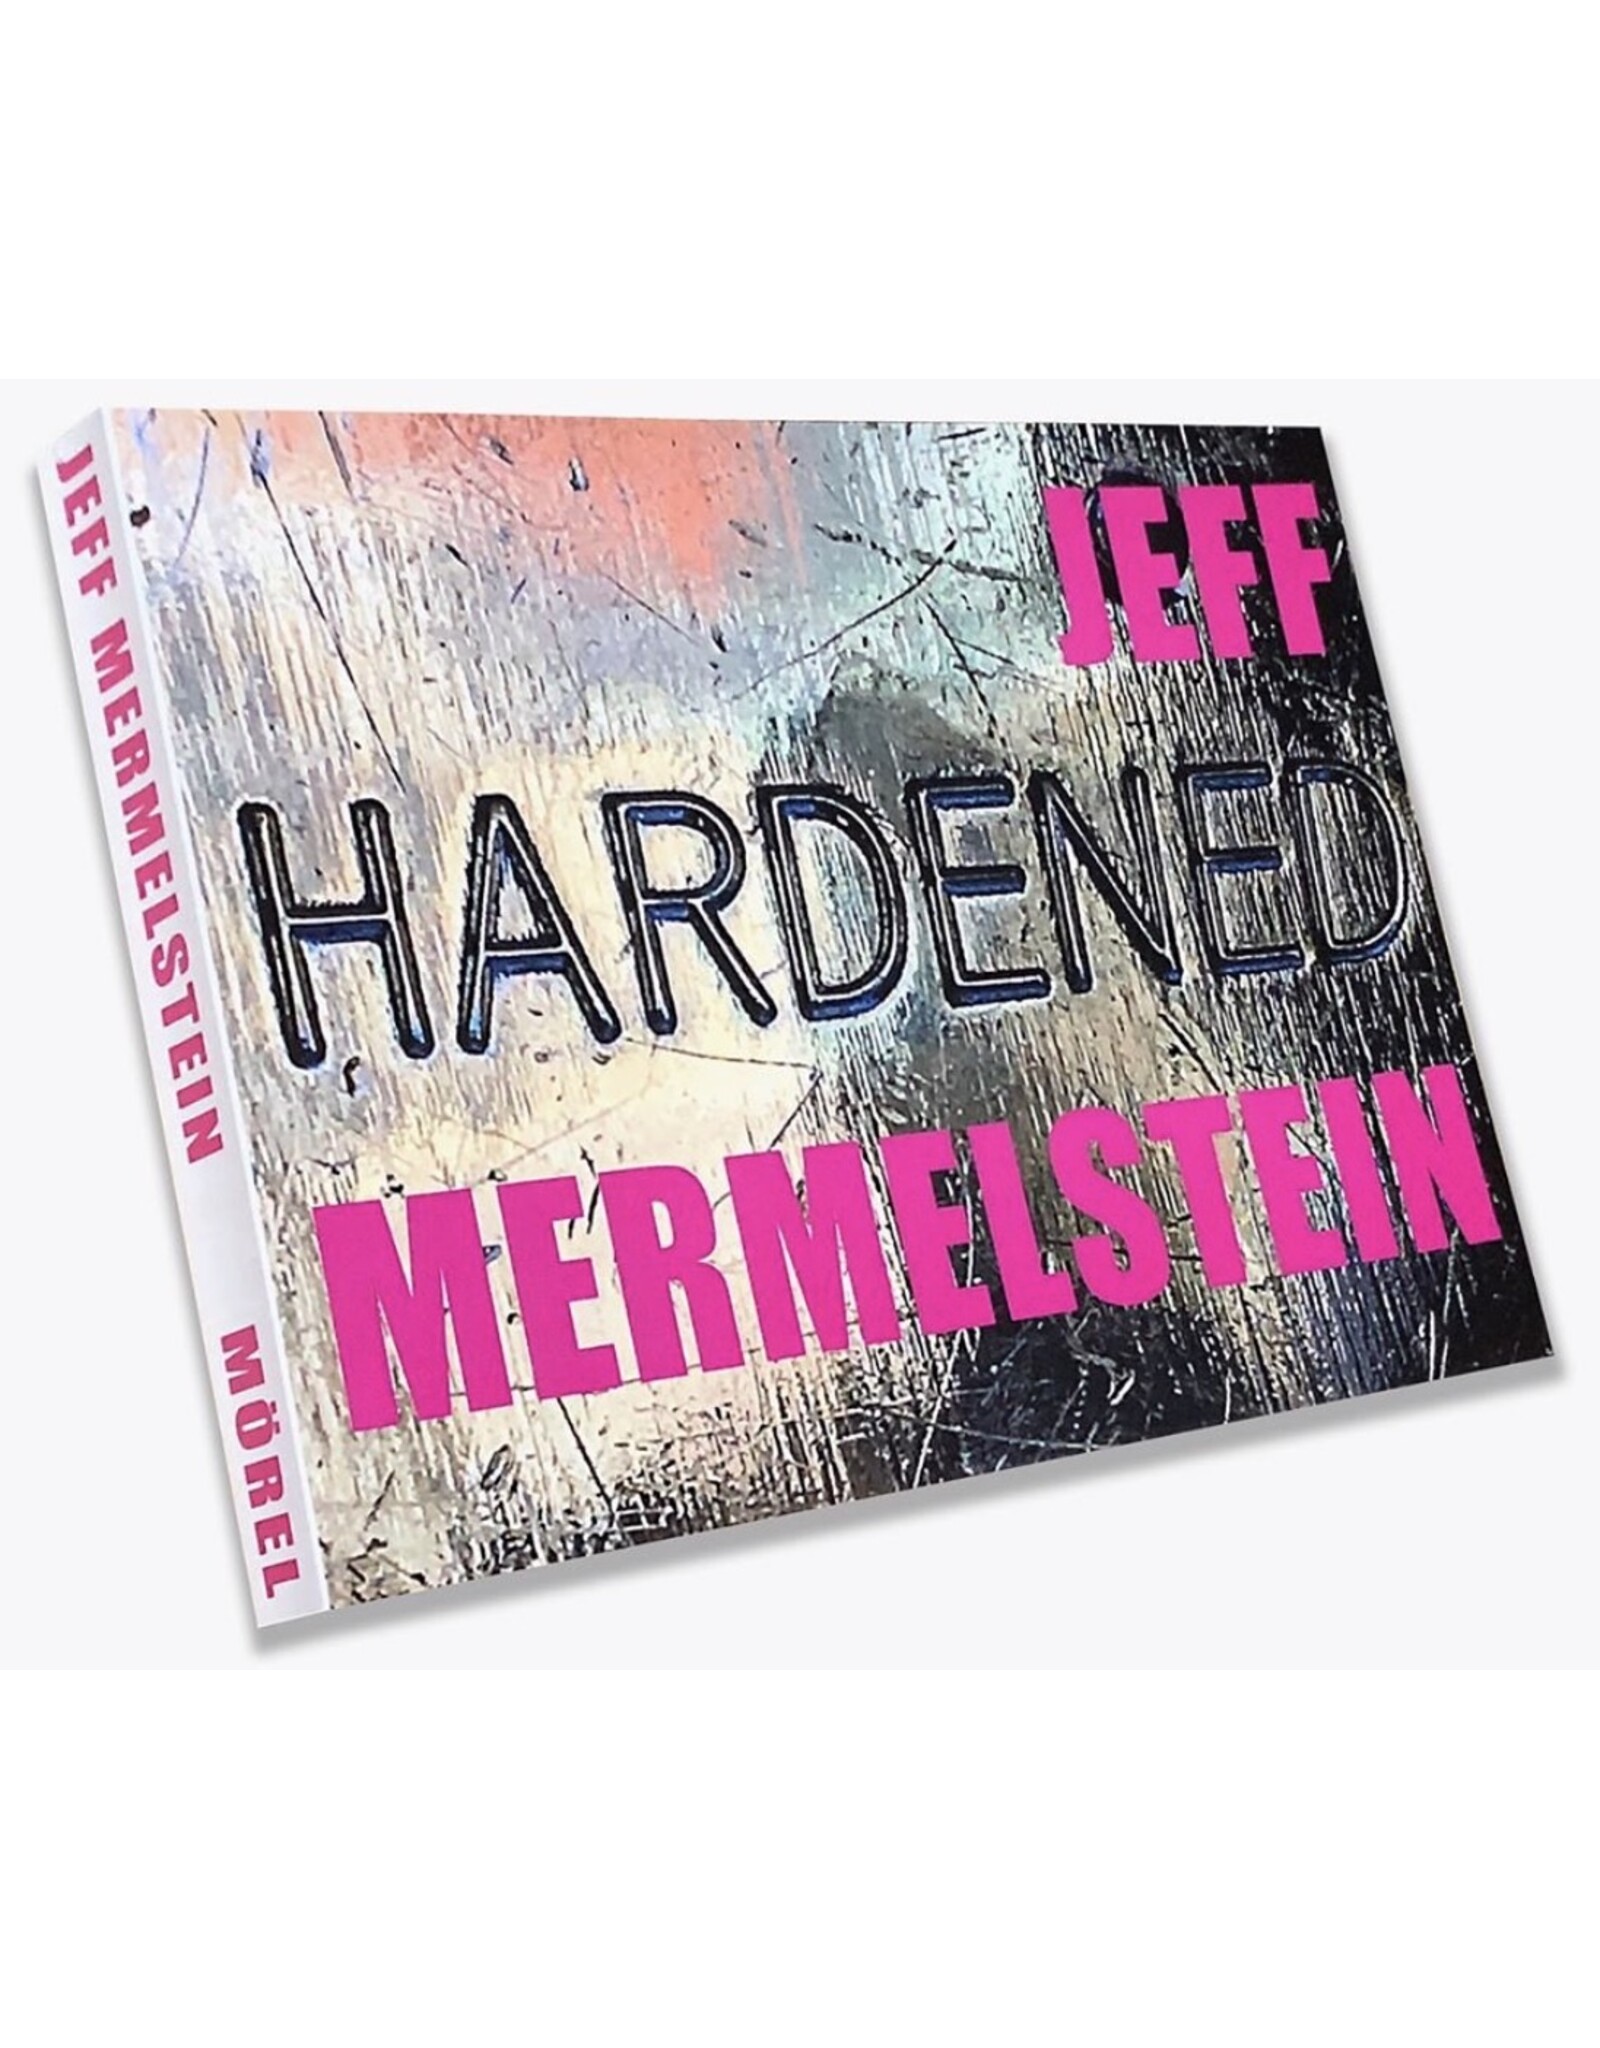 Jeff Mermelstein - Hardened